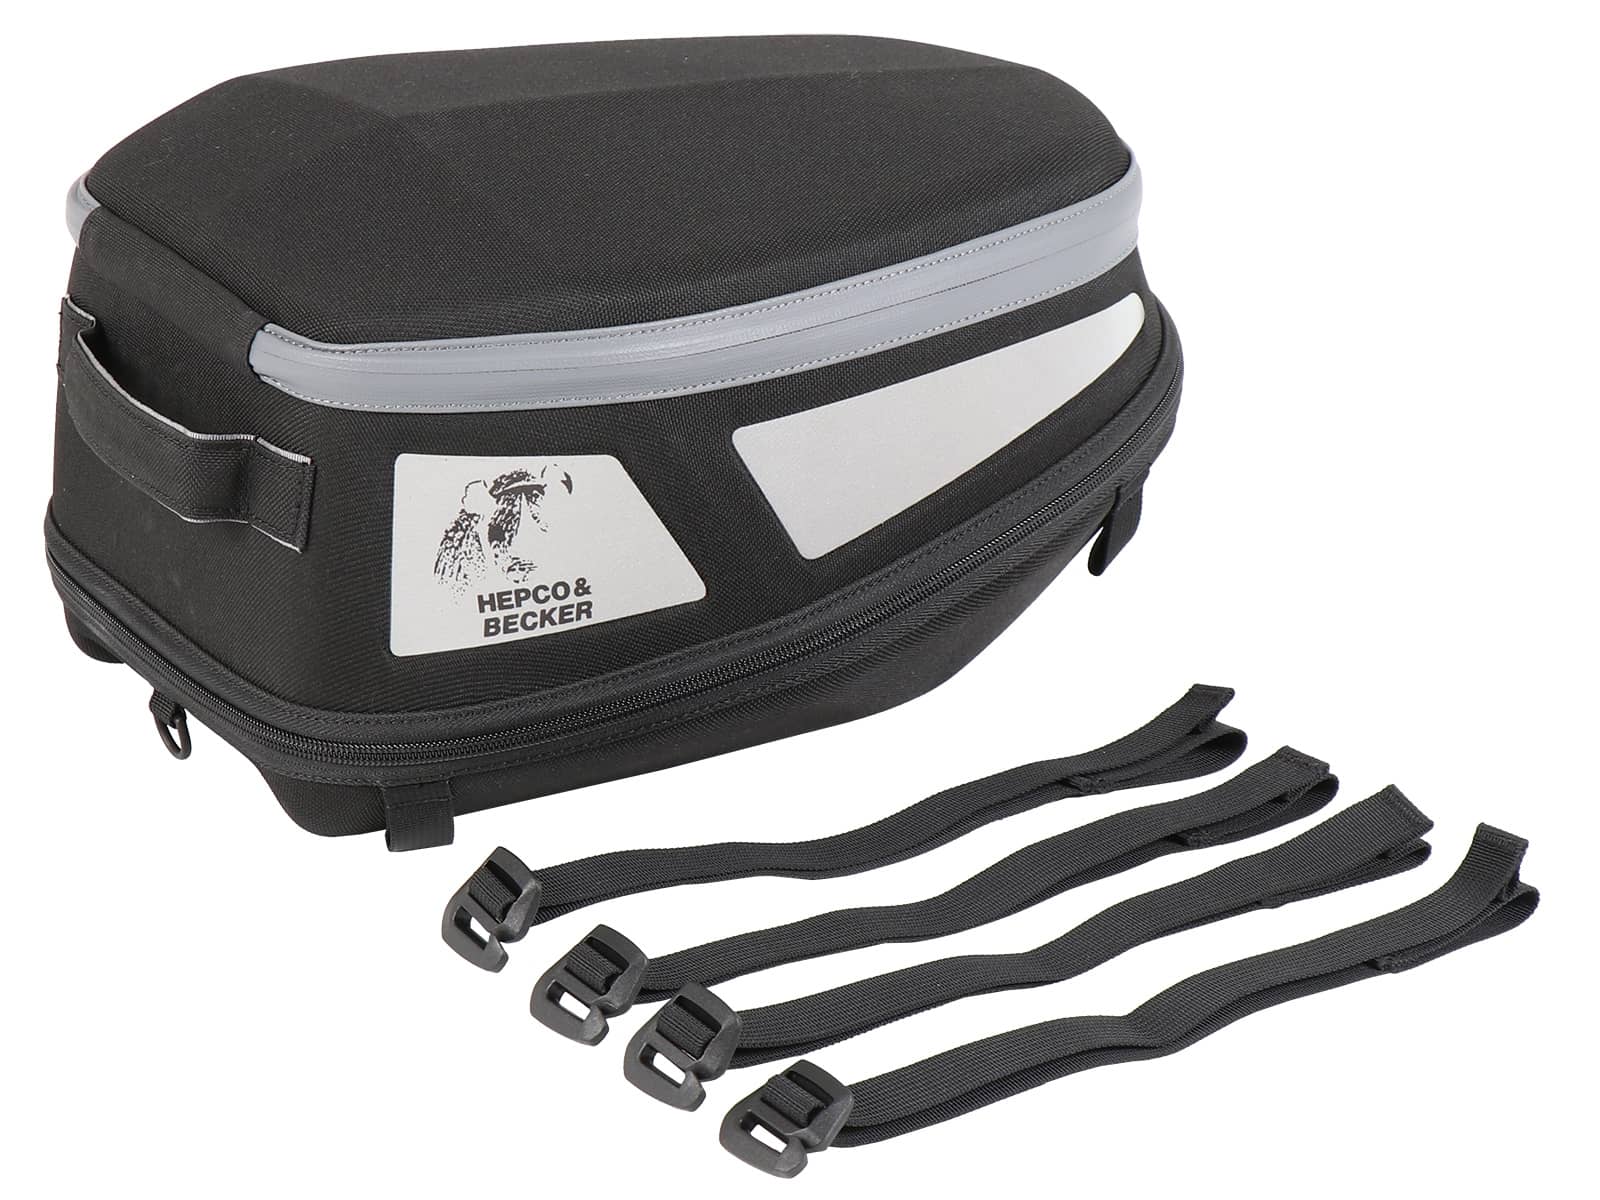 Royster rear bag Sport with strap fastening kit – black/grey